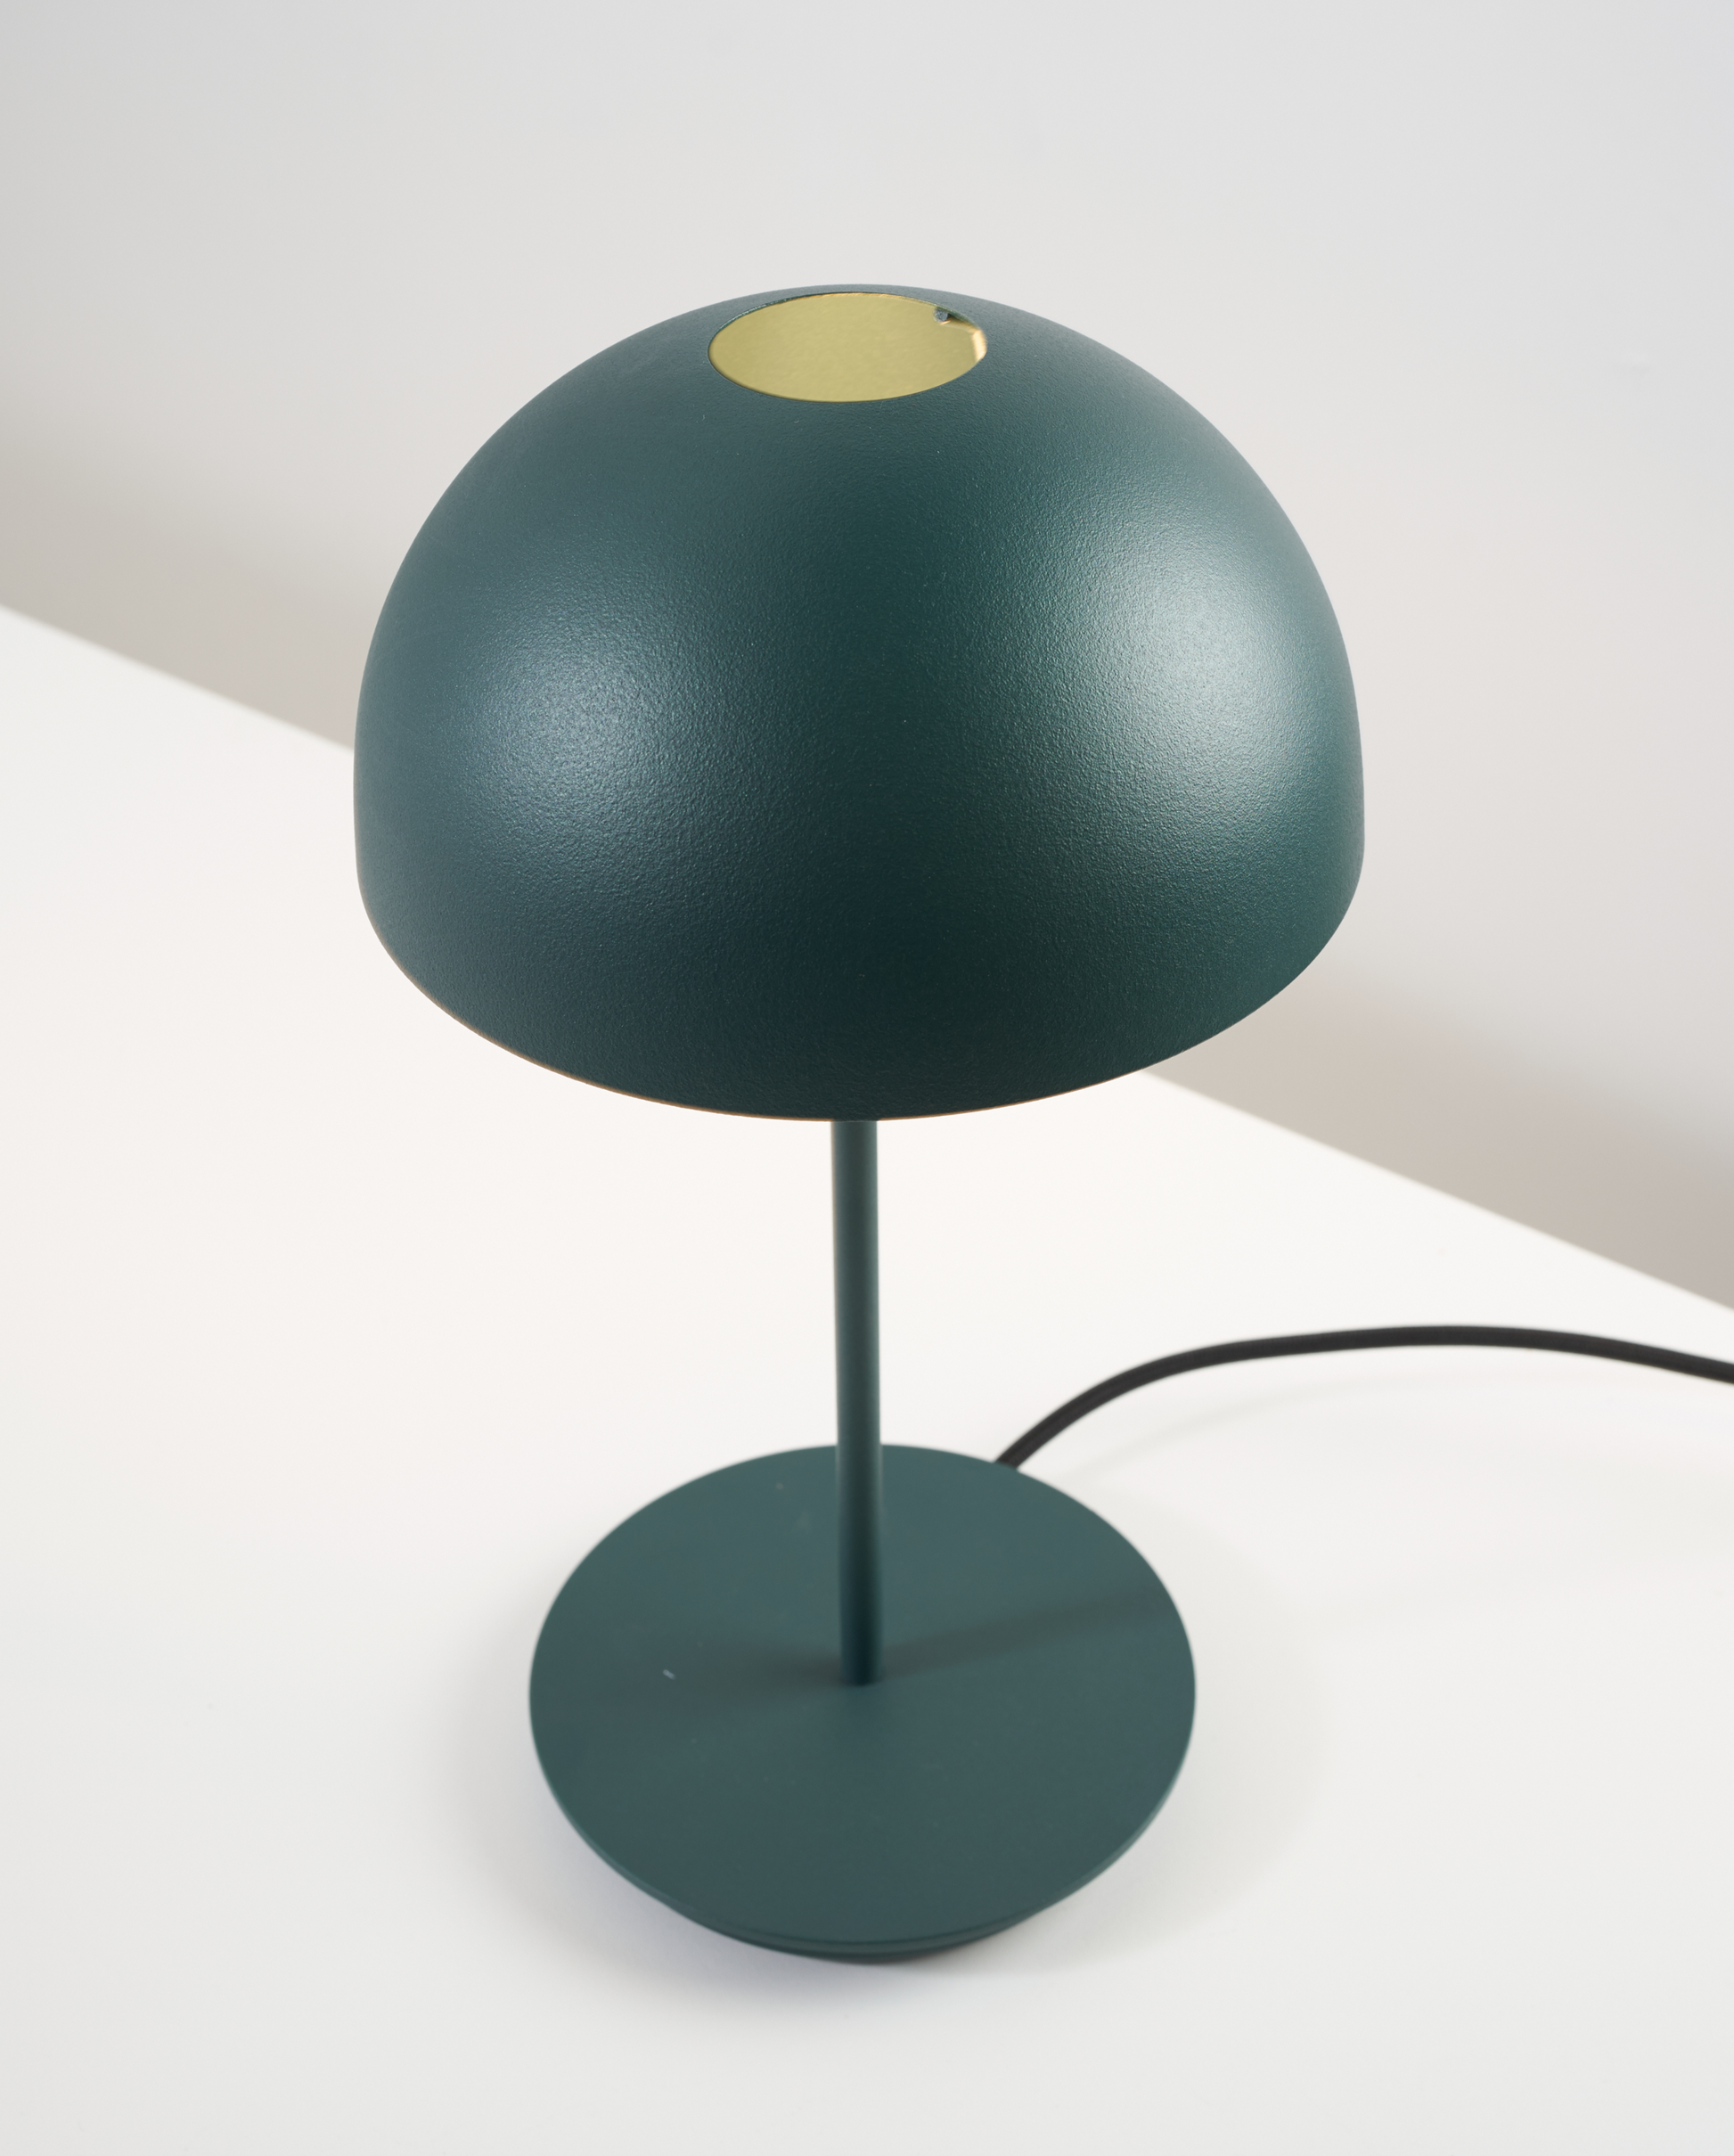 Bedside lamp, table lamp, bedroom, living room, lighting for house, green table lamp 